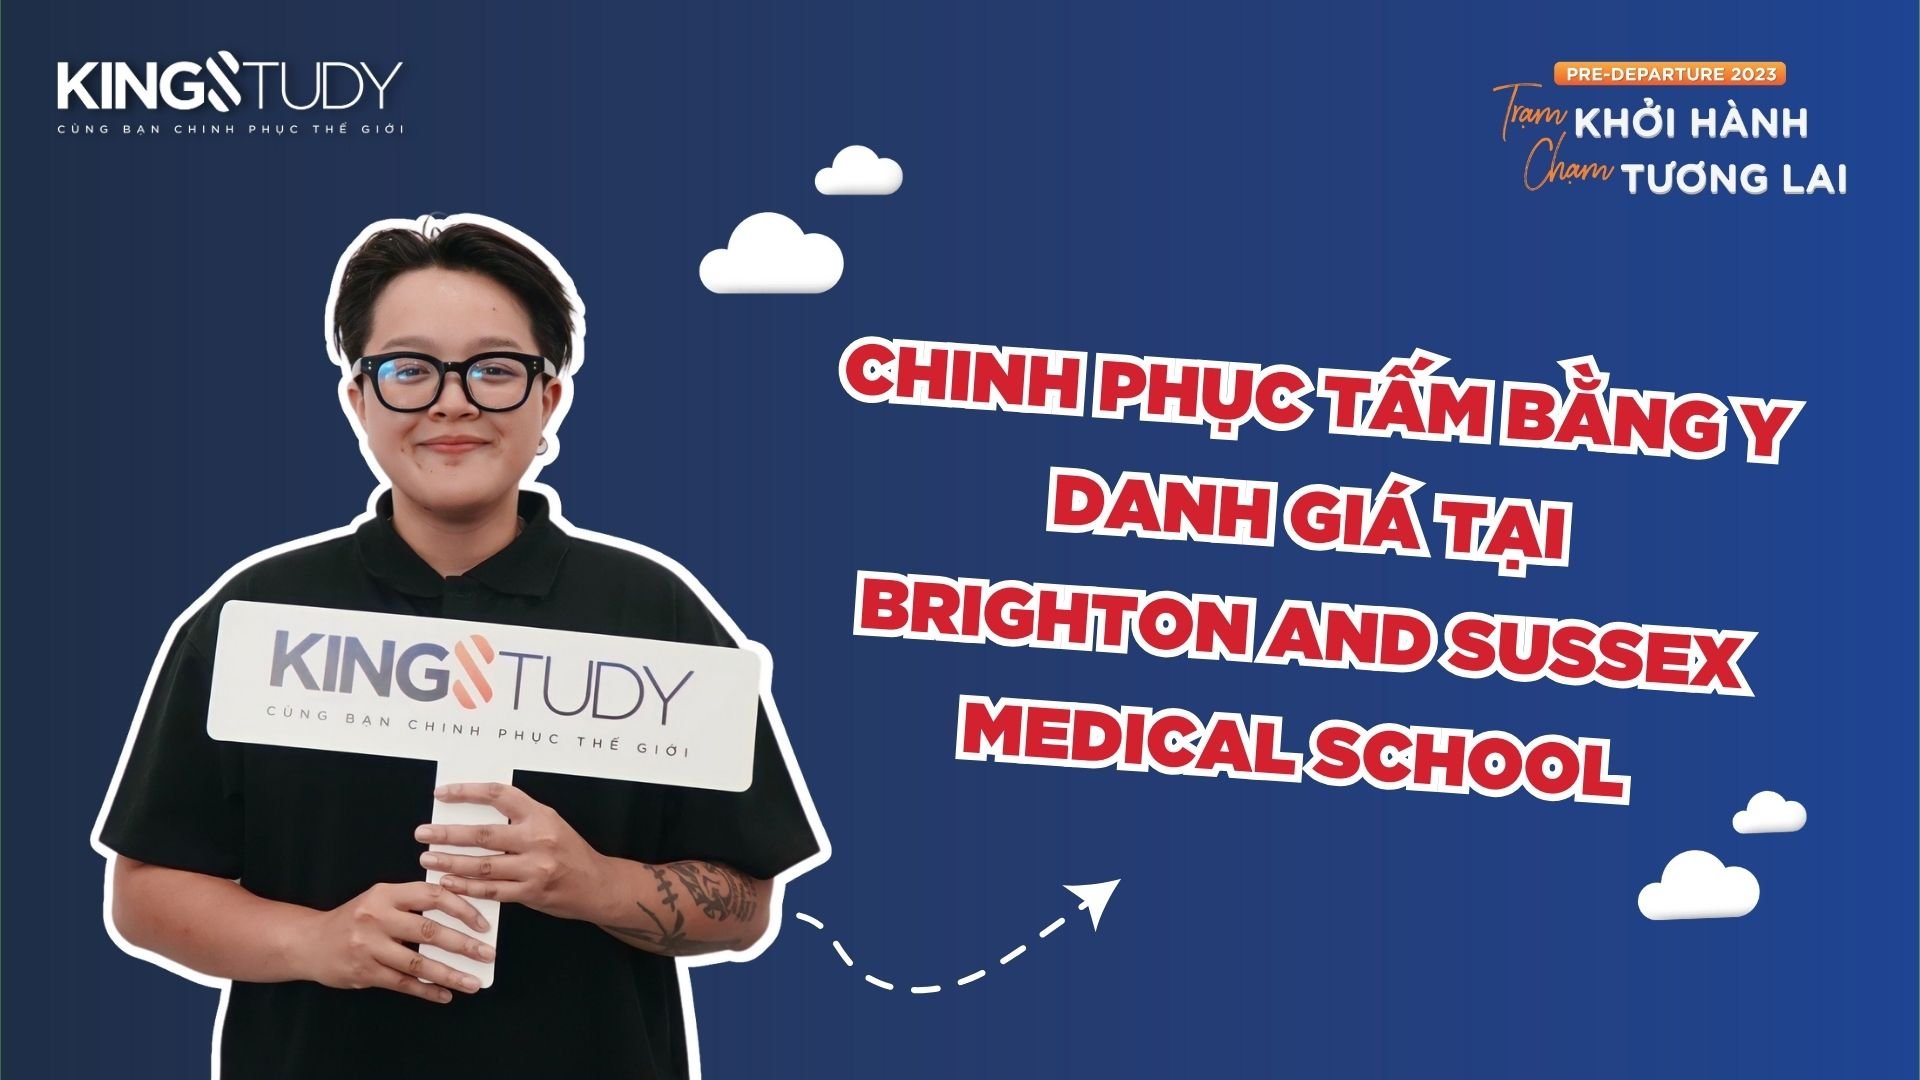 CHINH PHỤC TẤM BẰNG Y DANH GIÁ TẠI BRIGHTON AND SUSSEX MEDICAL SCHOOL